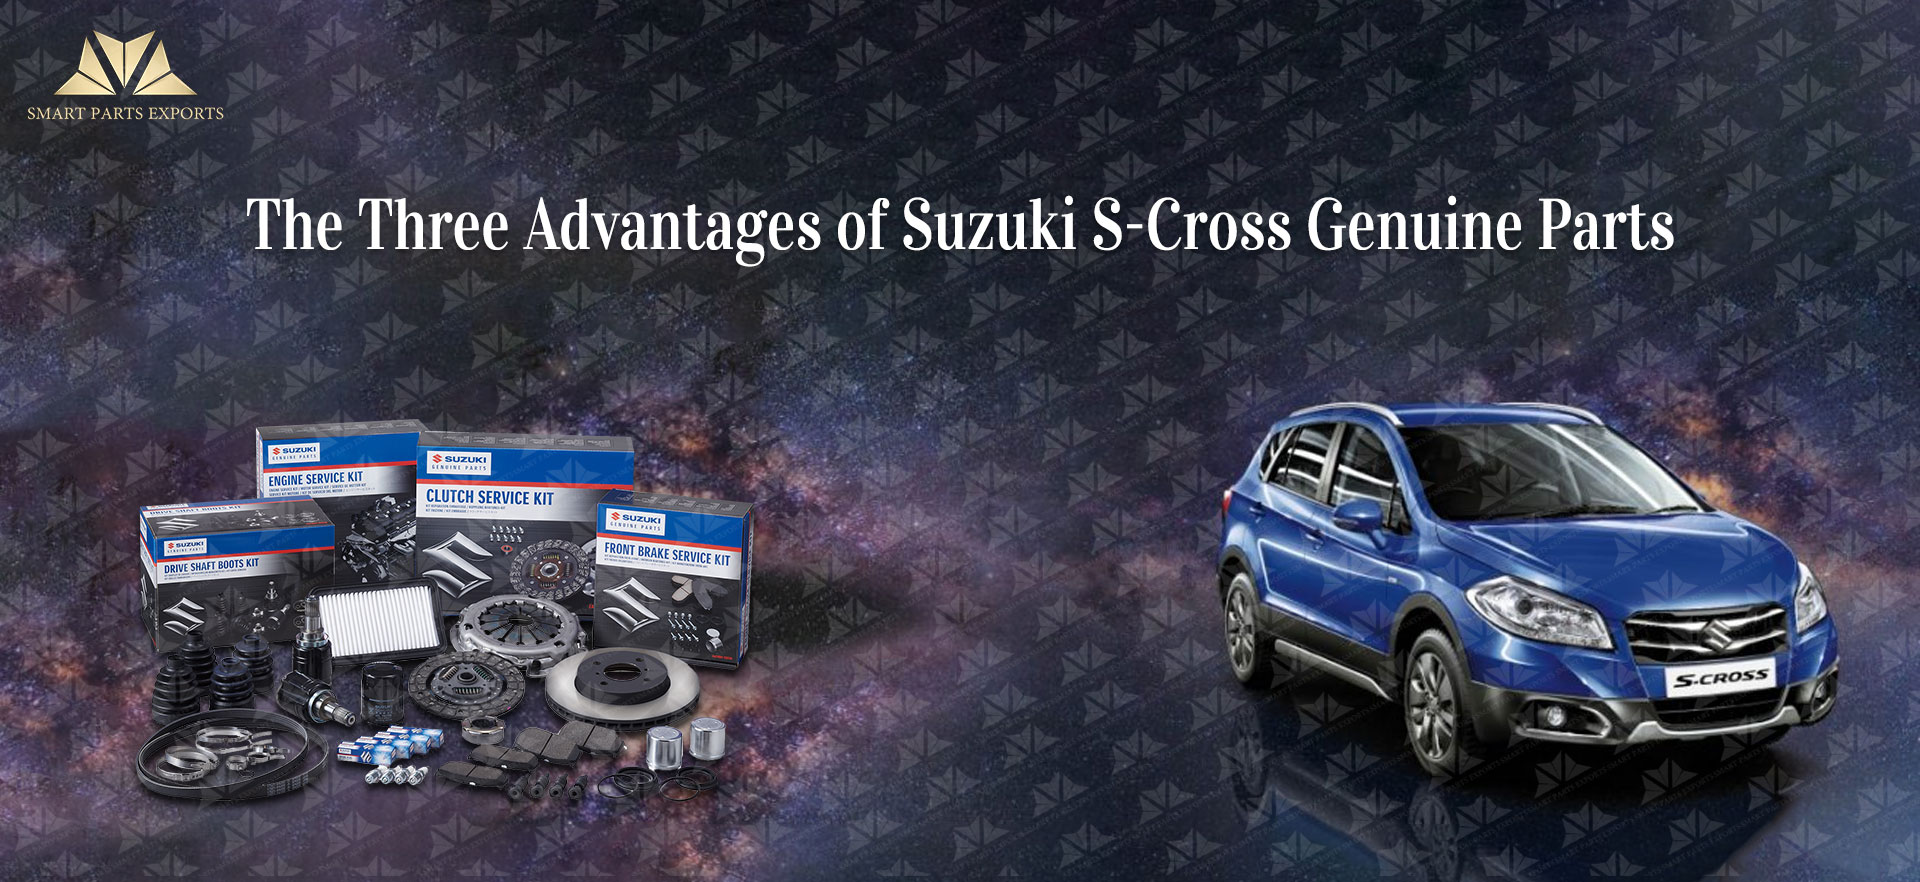 The Three Advantages of Suzuki S-Cross Genuine Parts